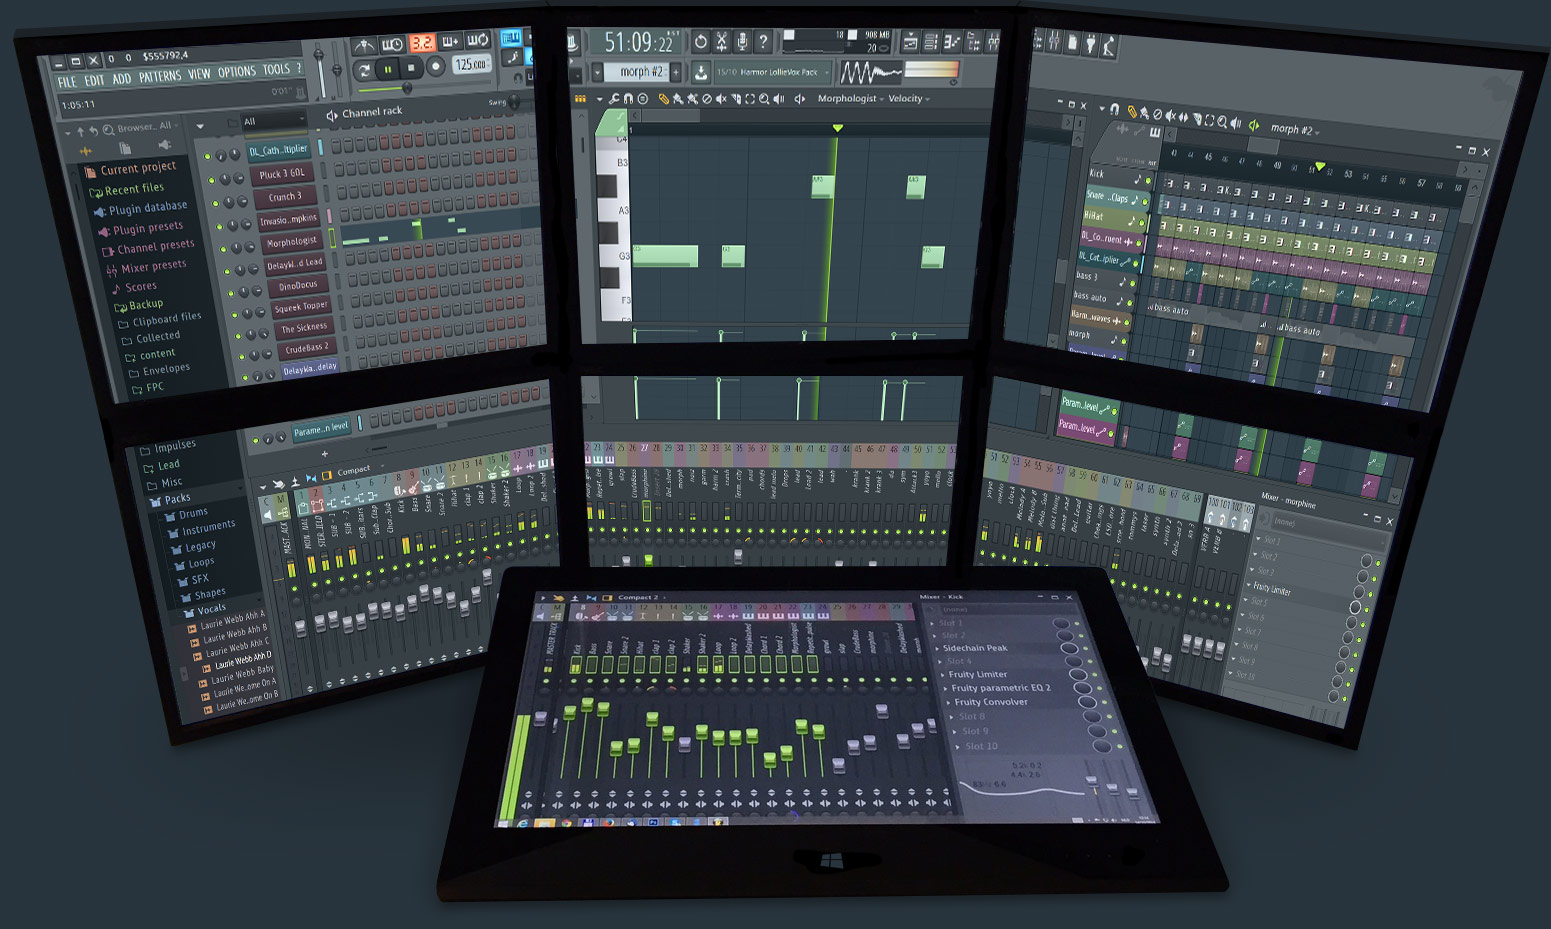 FL Studio 12 beta